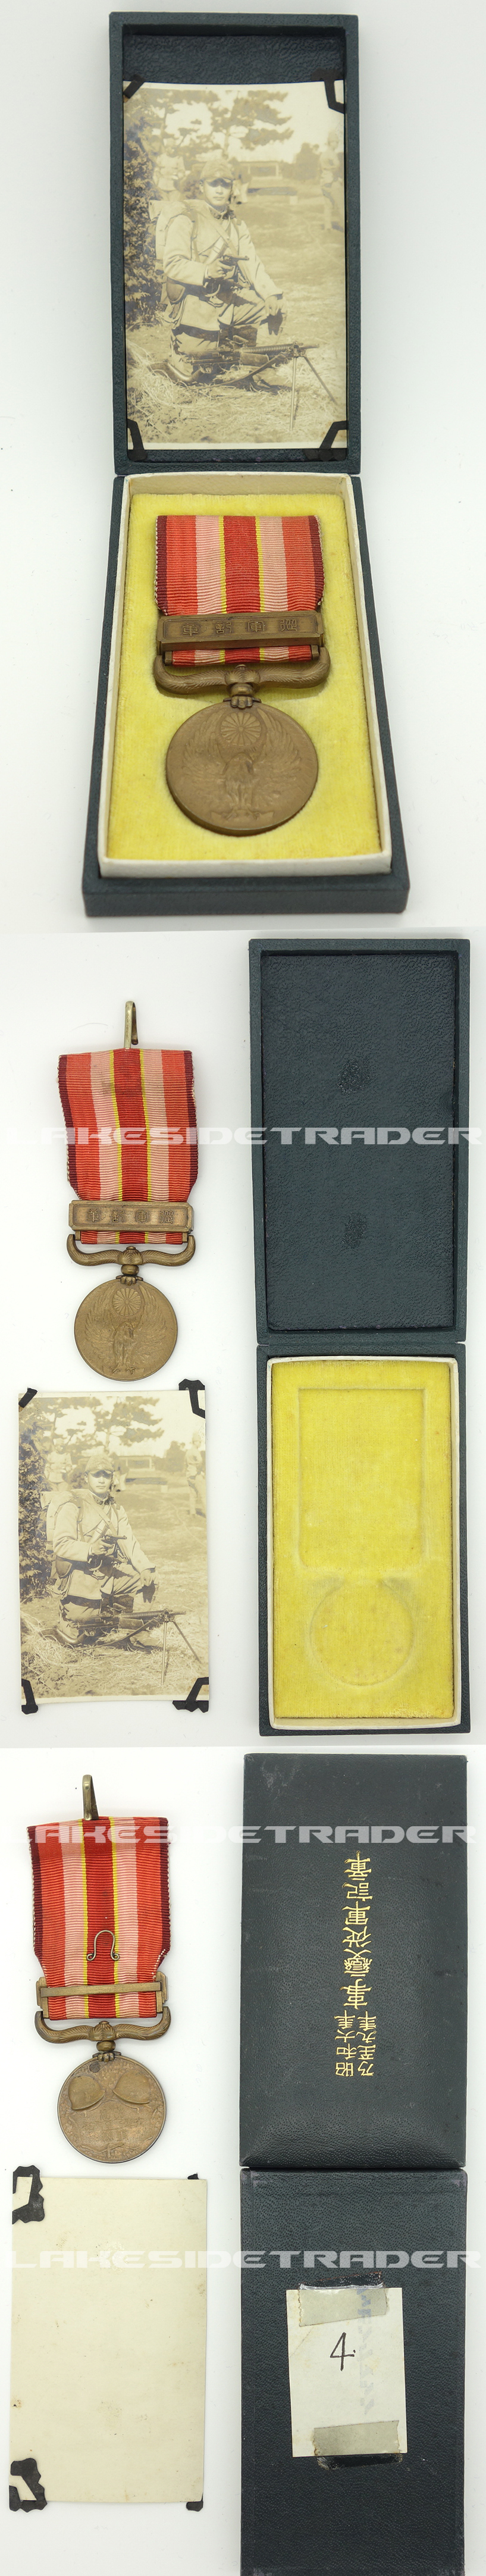 Cased Japanese Manchurian Incident Medal